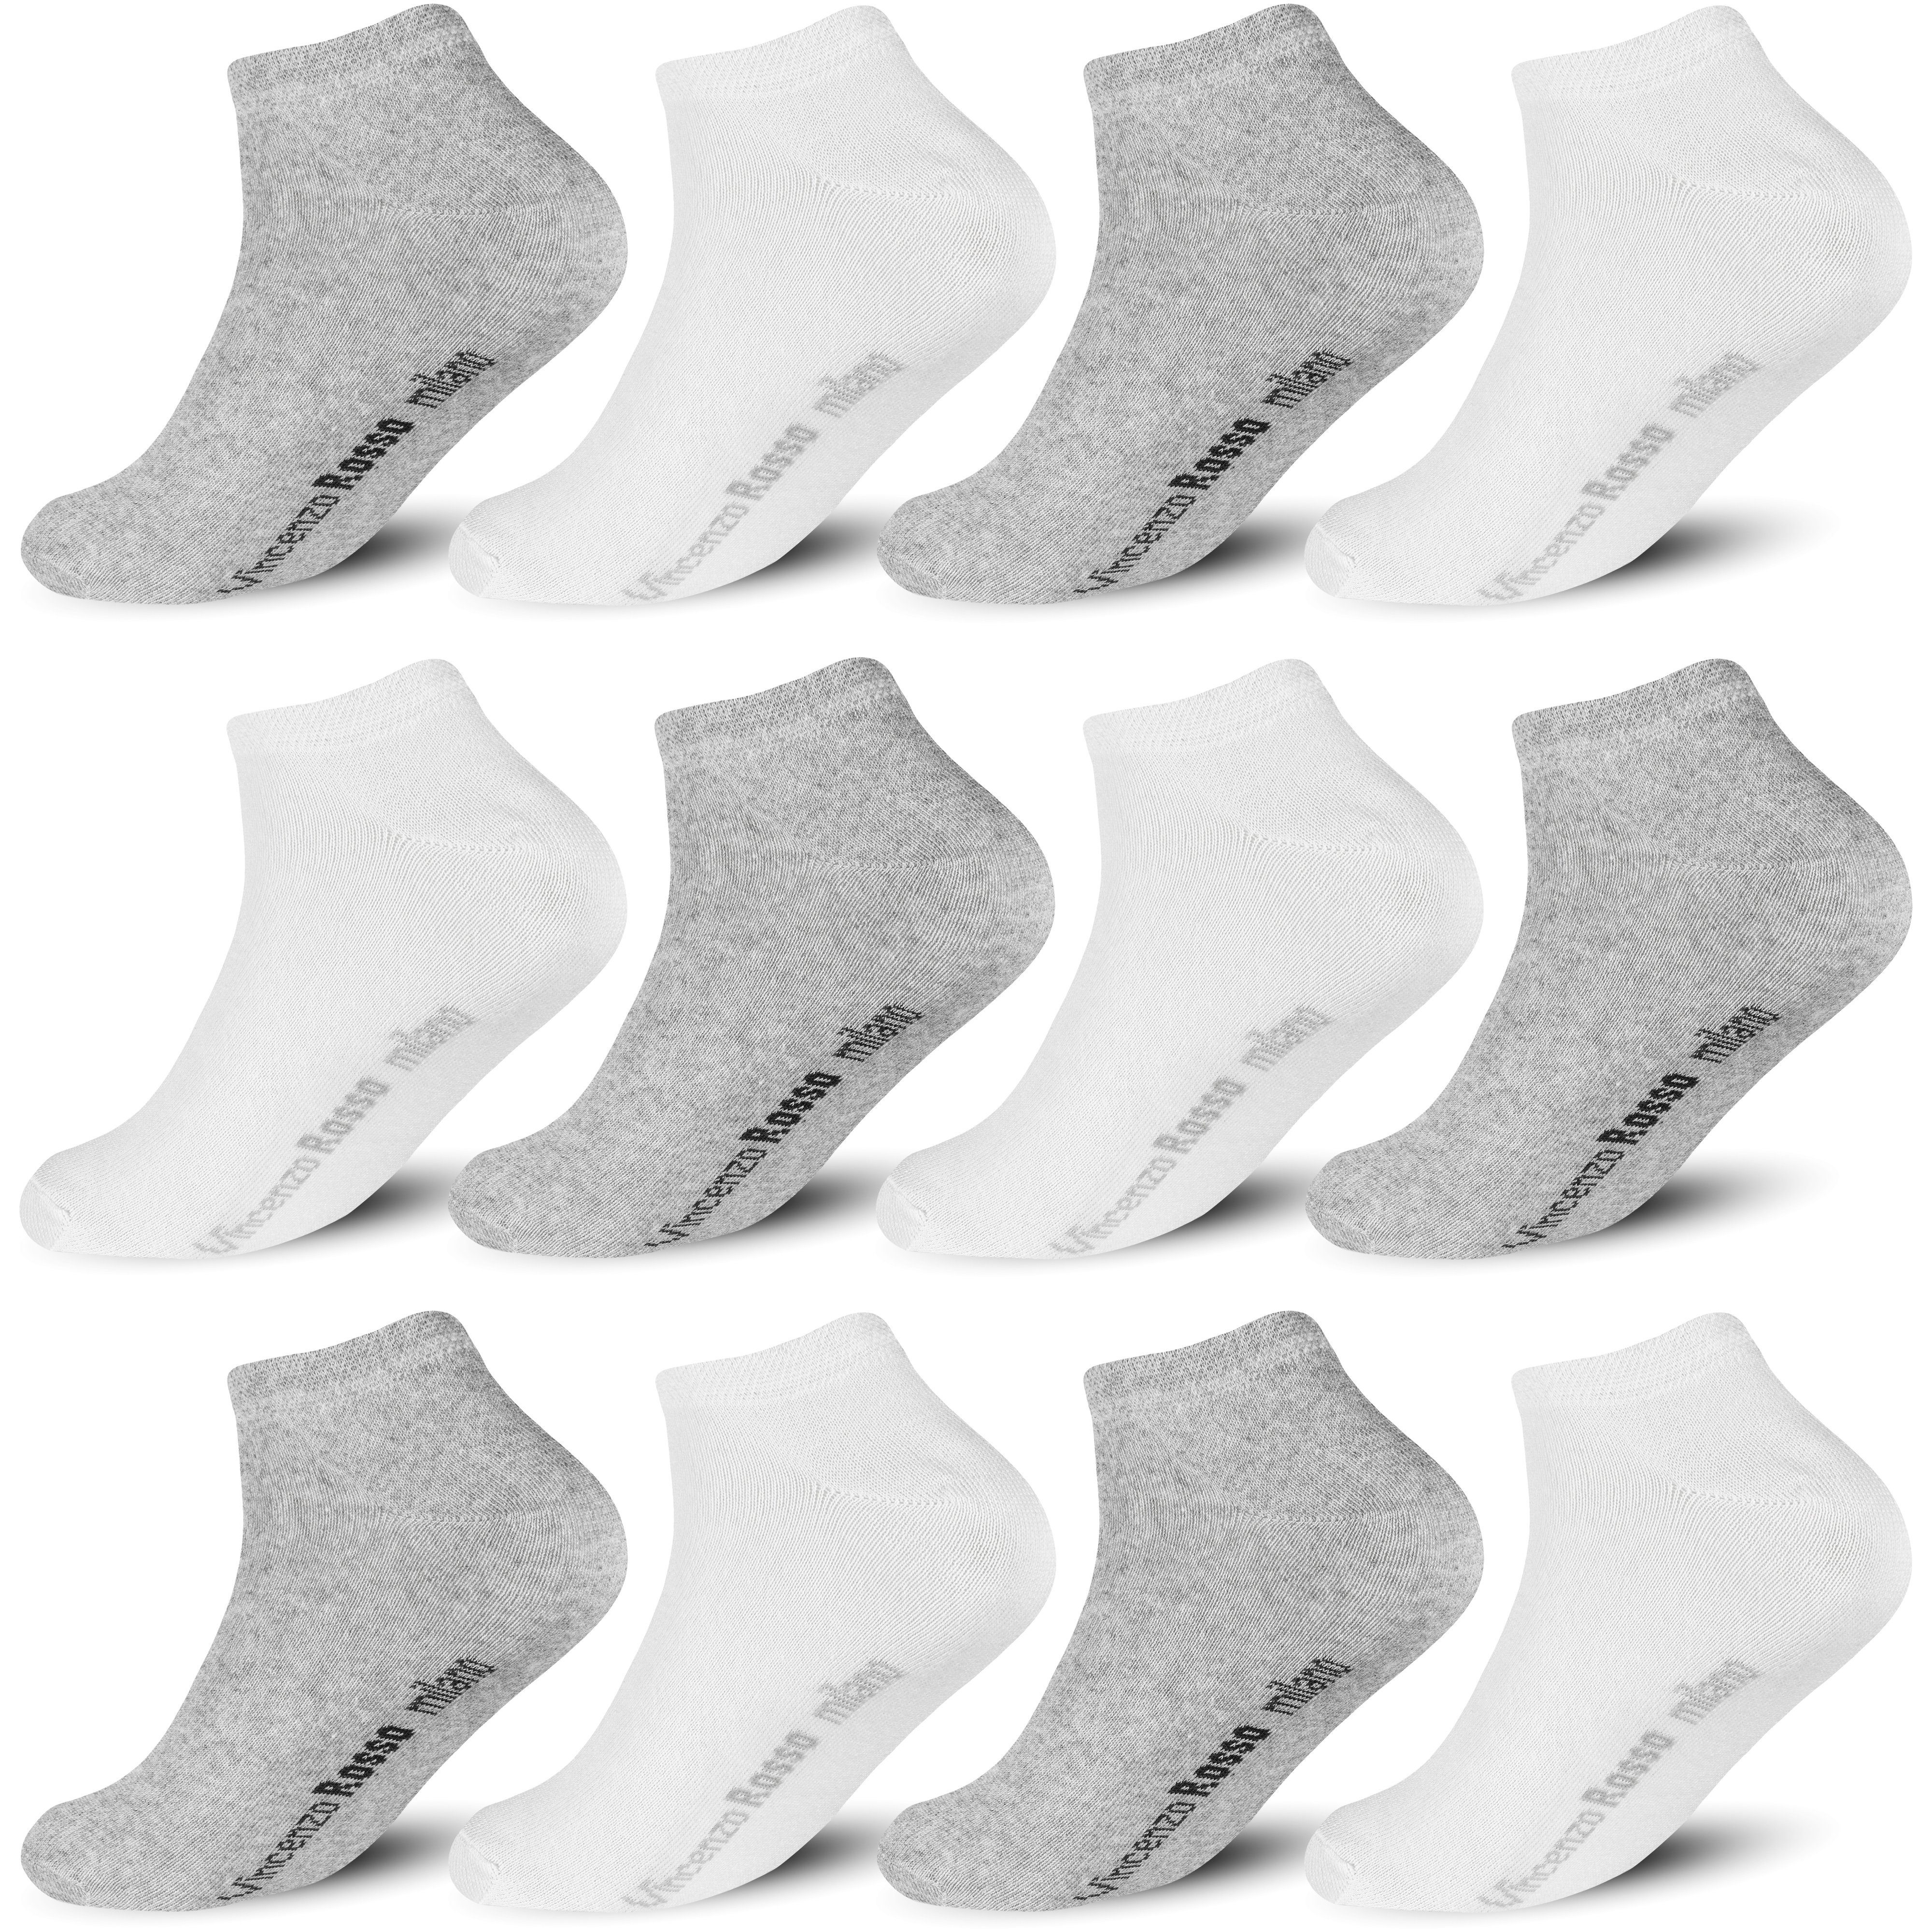 TEXEMP Sneakersocken 12 Paar Sneaker Socken Baumwolle Herren Damen Sport Schwarz Weiß Grau Kurz Füßlinge Quarter (Packung) Langlebig & Robust Grau/Weiß